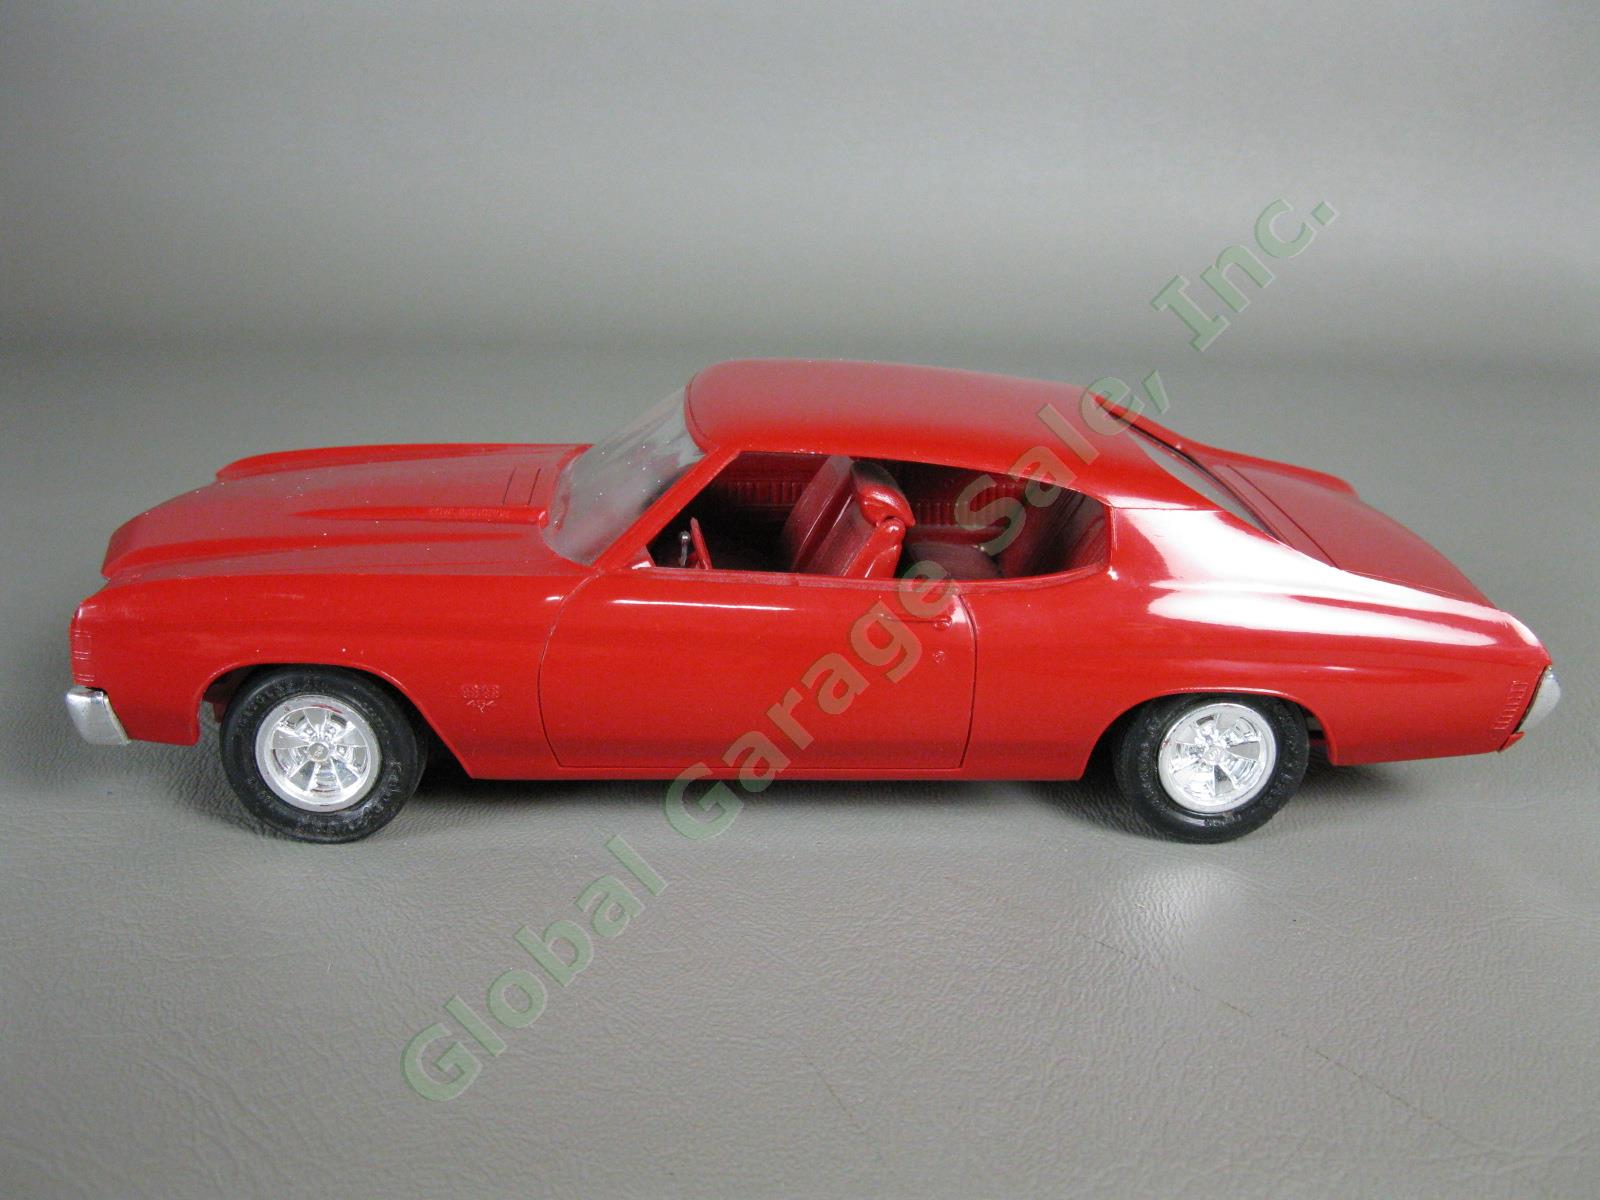 ORIGINAL VTG 1971 Chevrolet Impala SS 454 V8 Red Plastic Dealer Promo Model Car 1